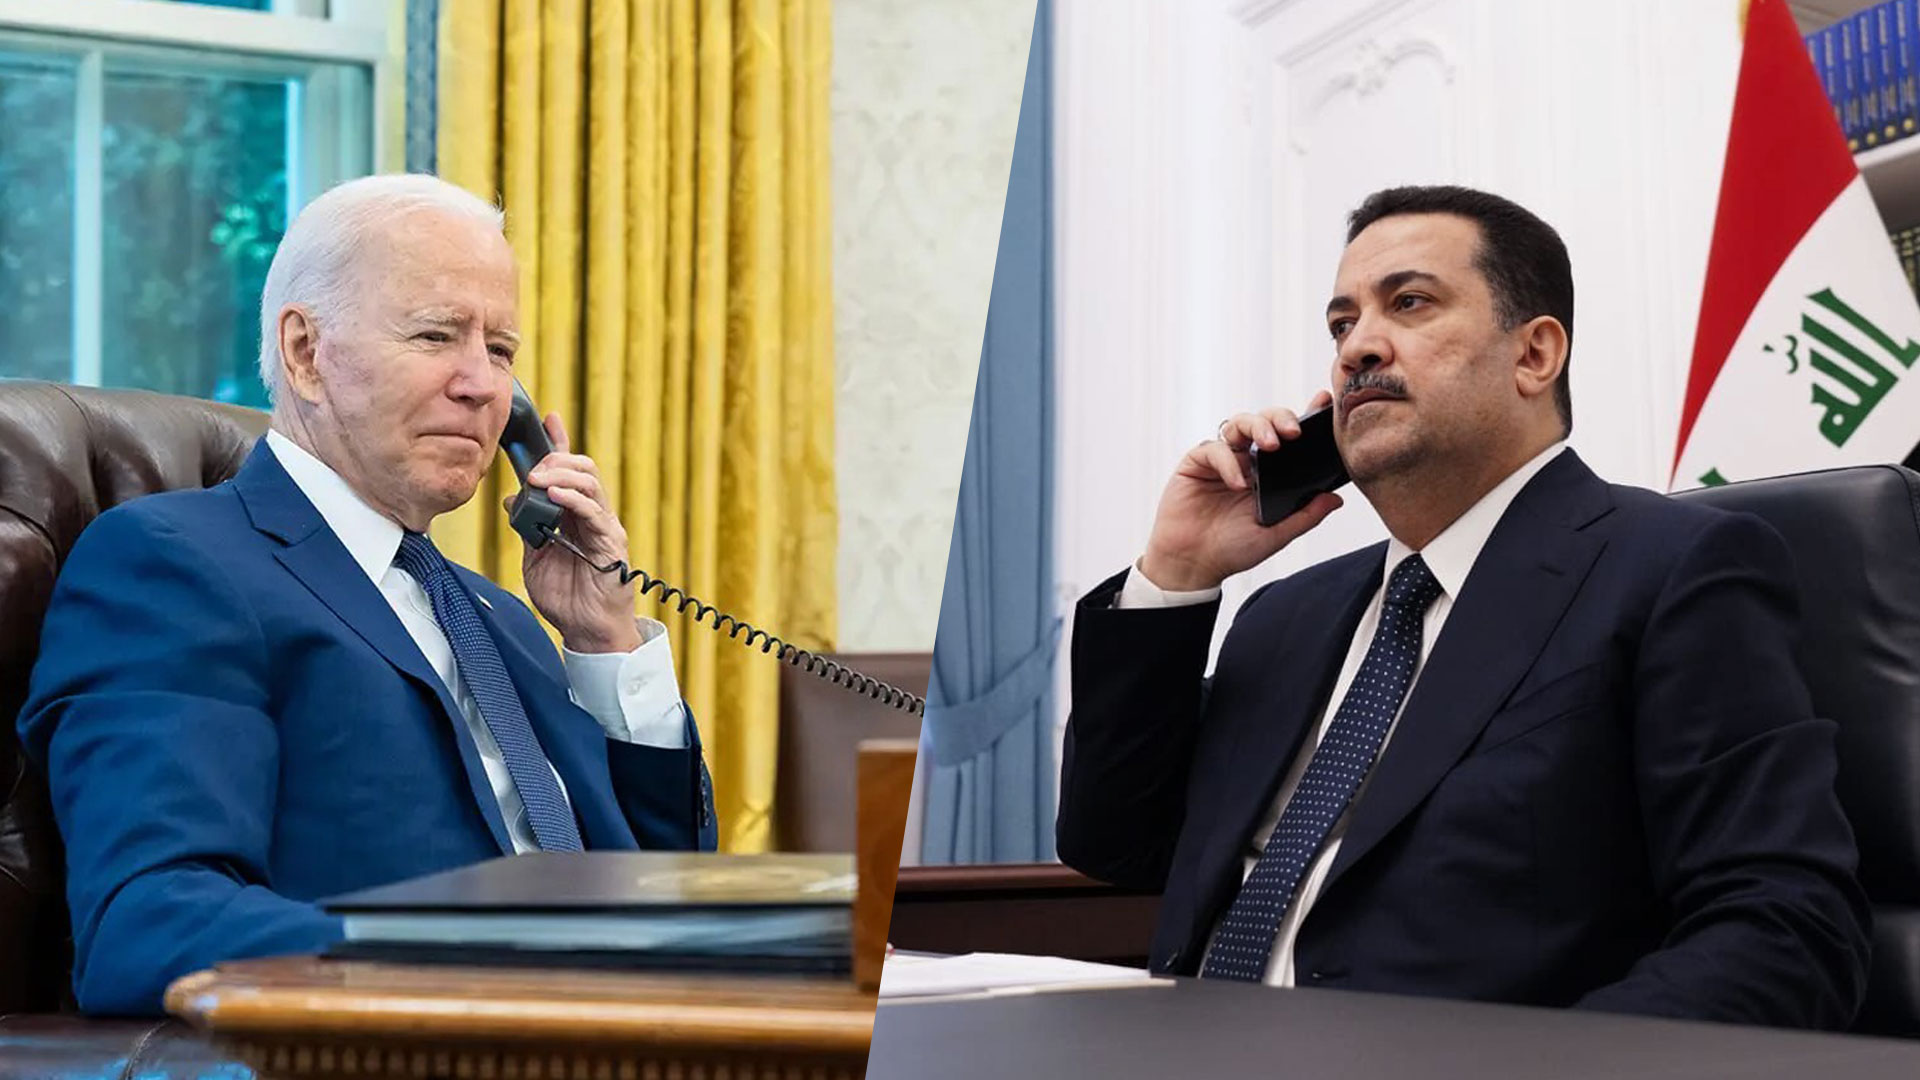 President Biden asks PM al-Sudani to mediate with Iran amid Israeli-Palestinian conflict